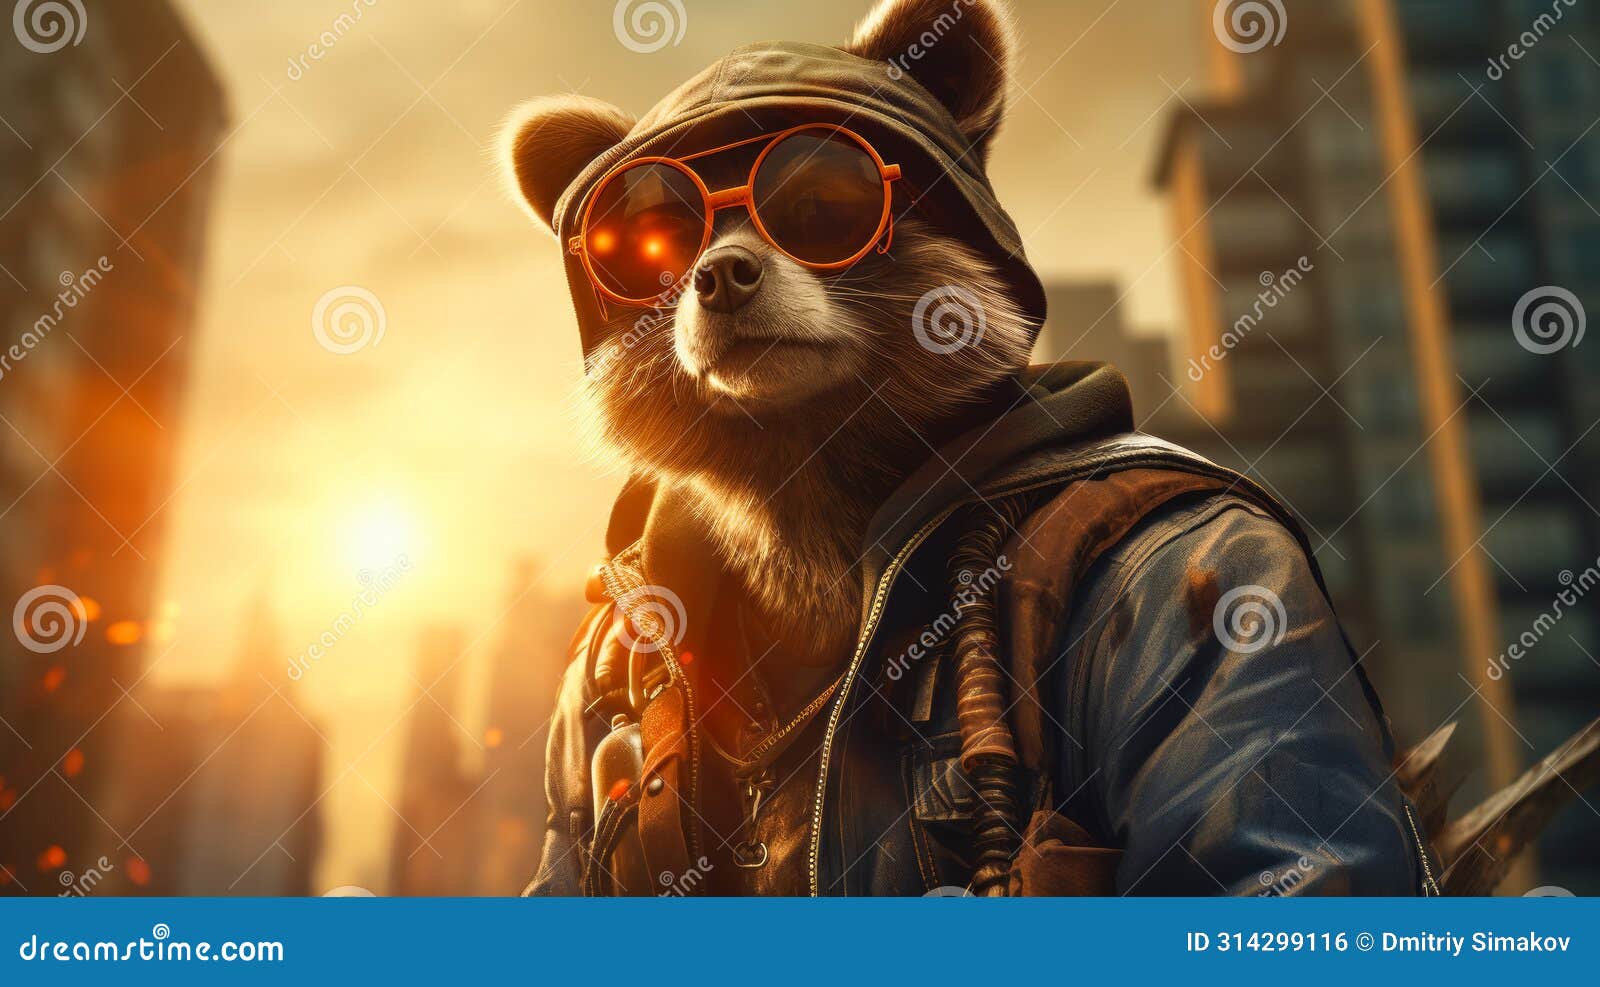 envision a fashionable raccoon